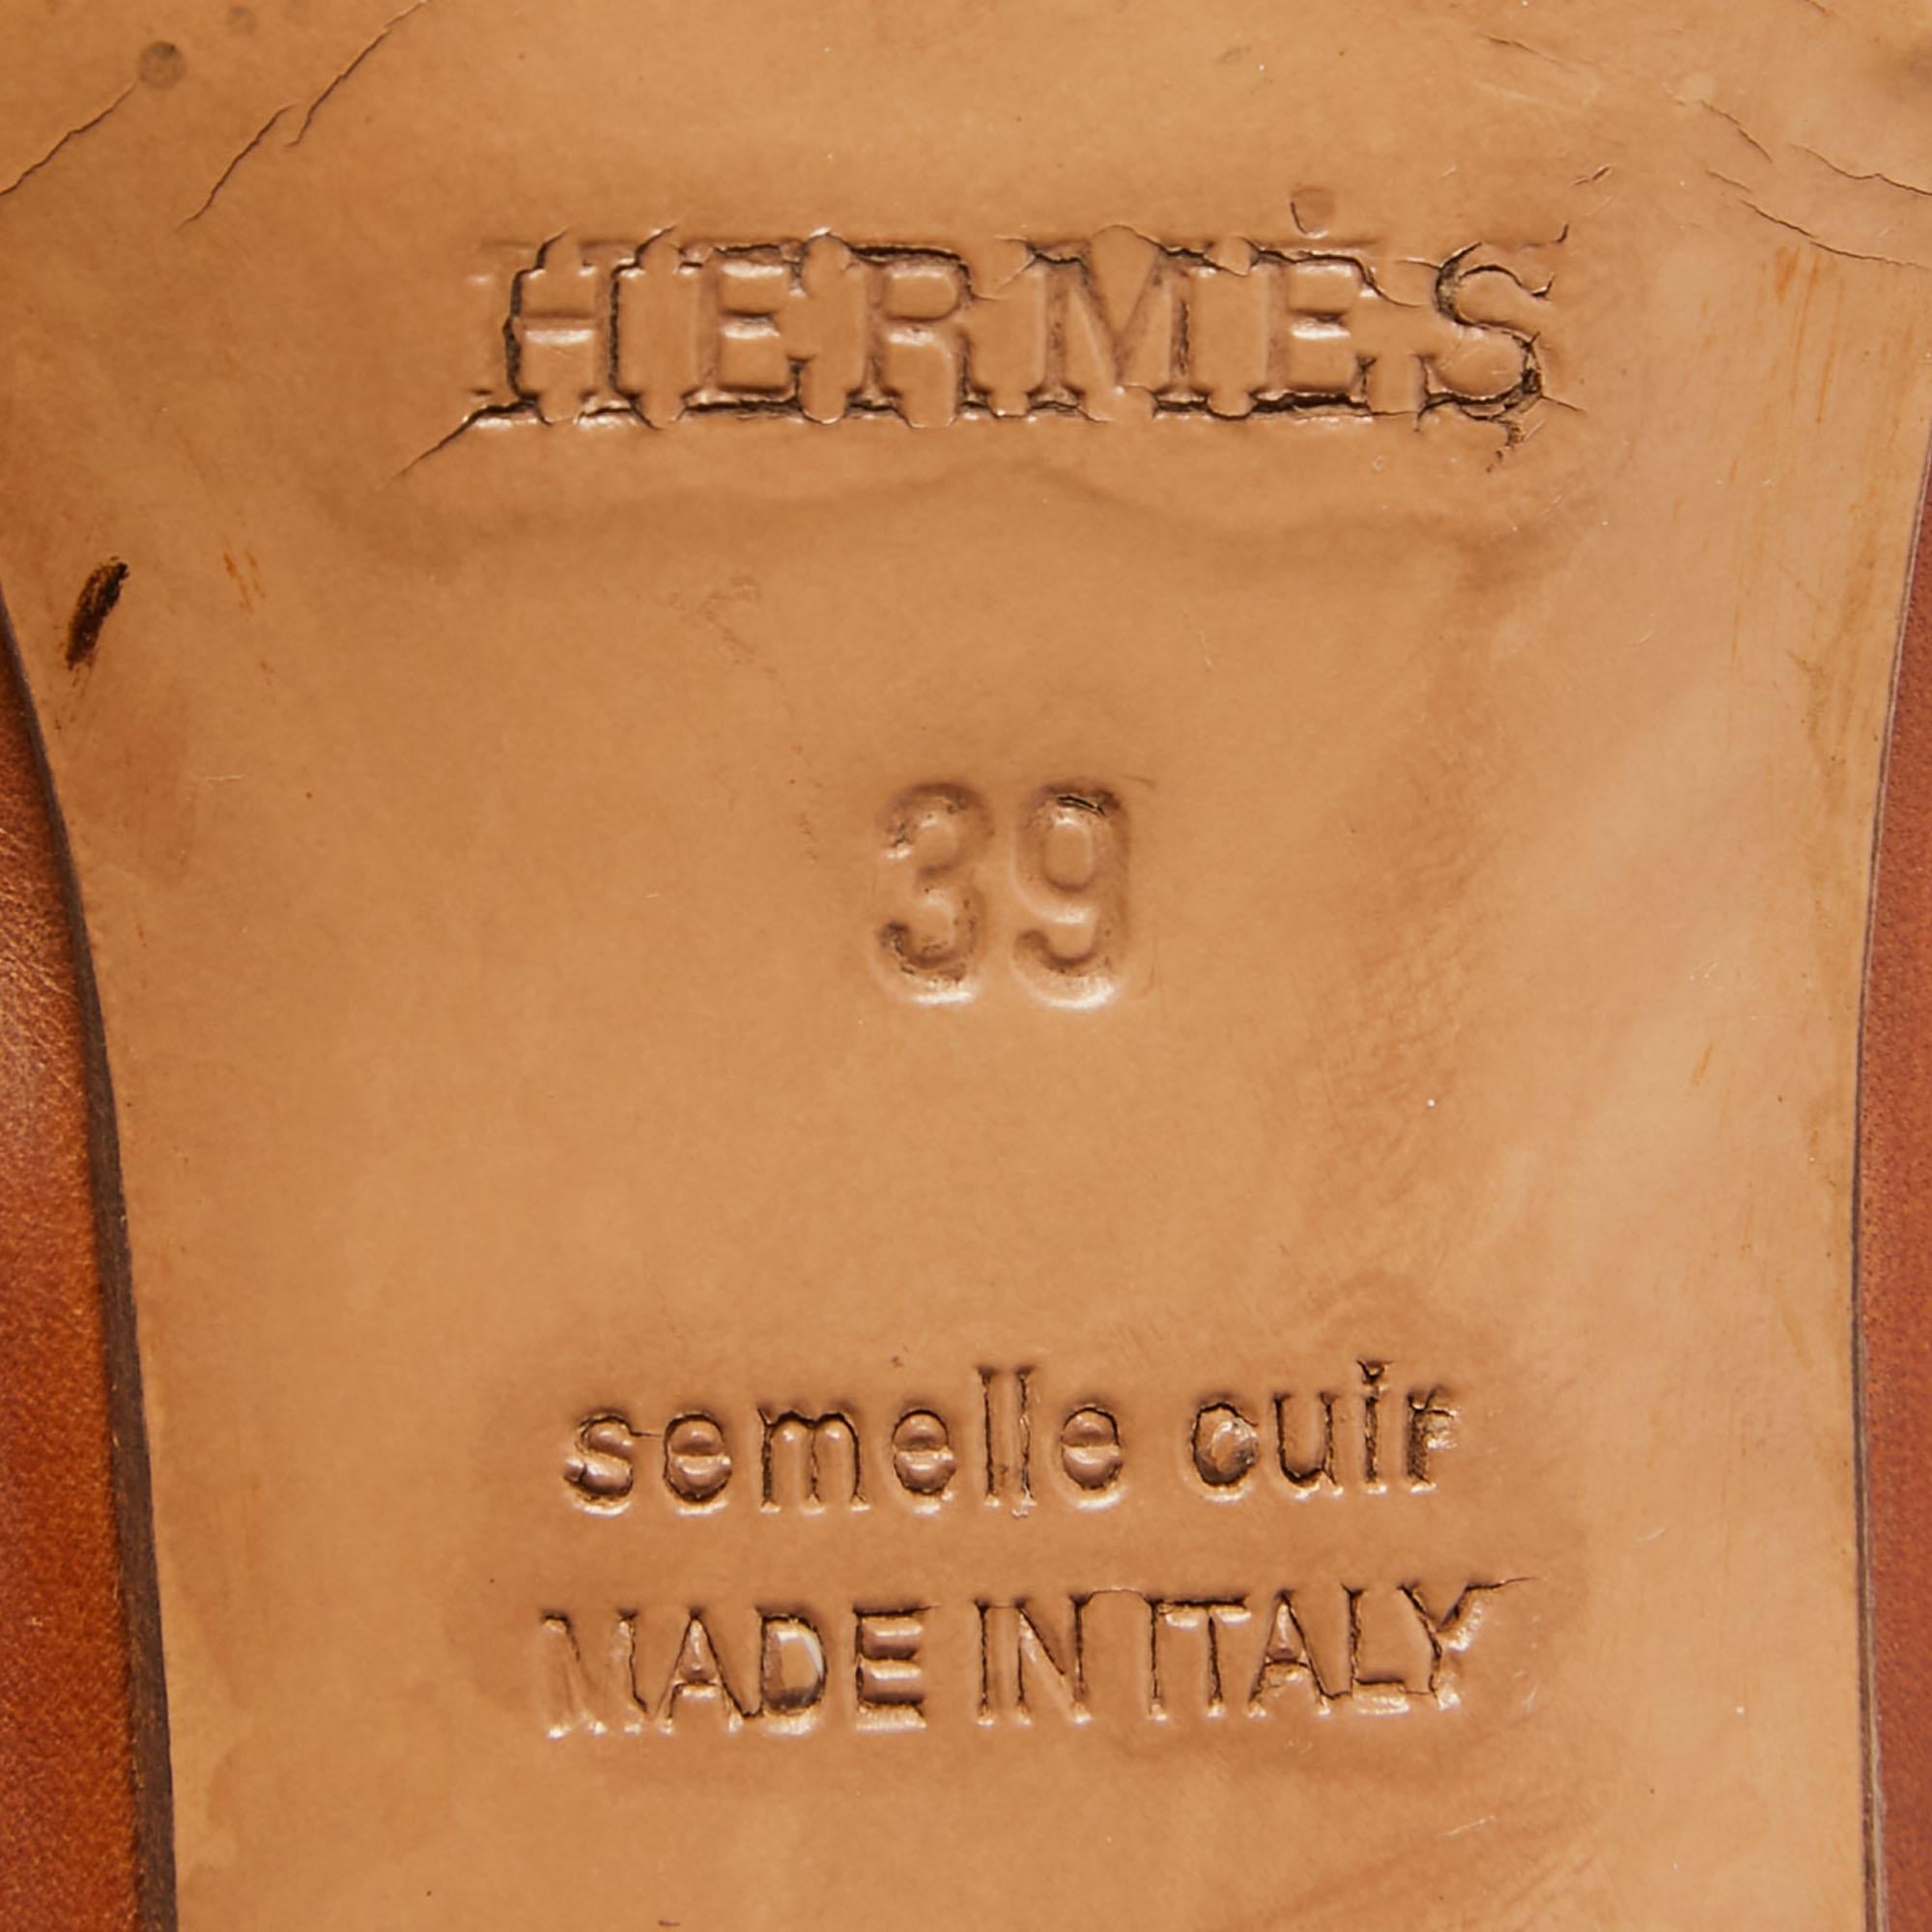 Hermes Brown Leather Saint Germain Block Heel Ankle Boots Size 39 1